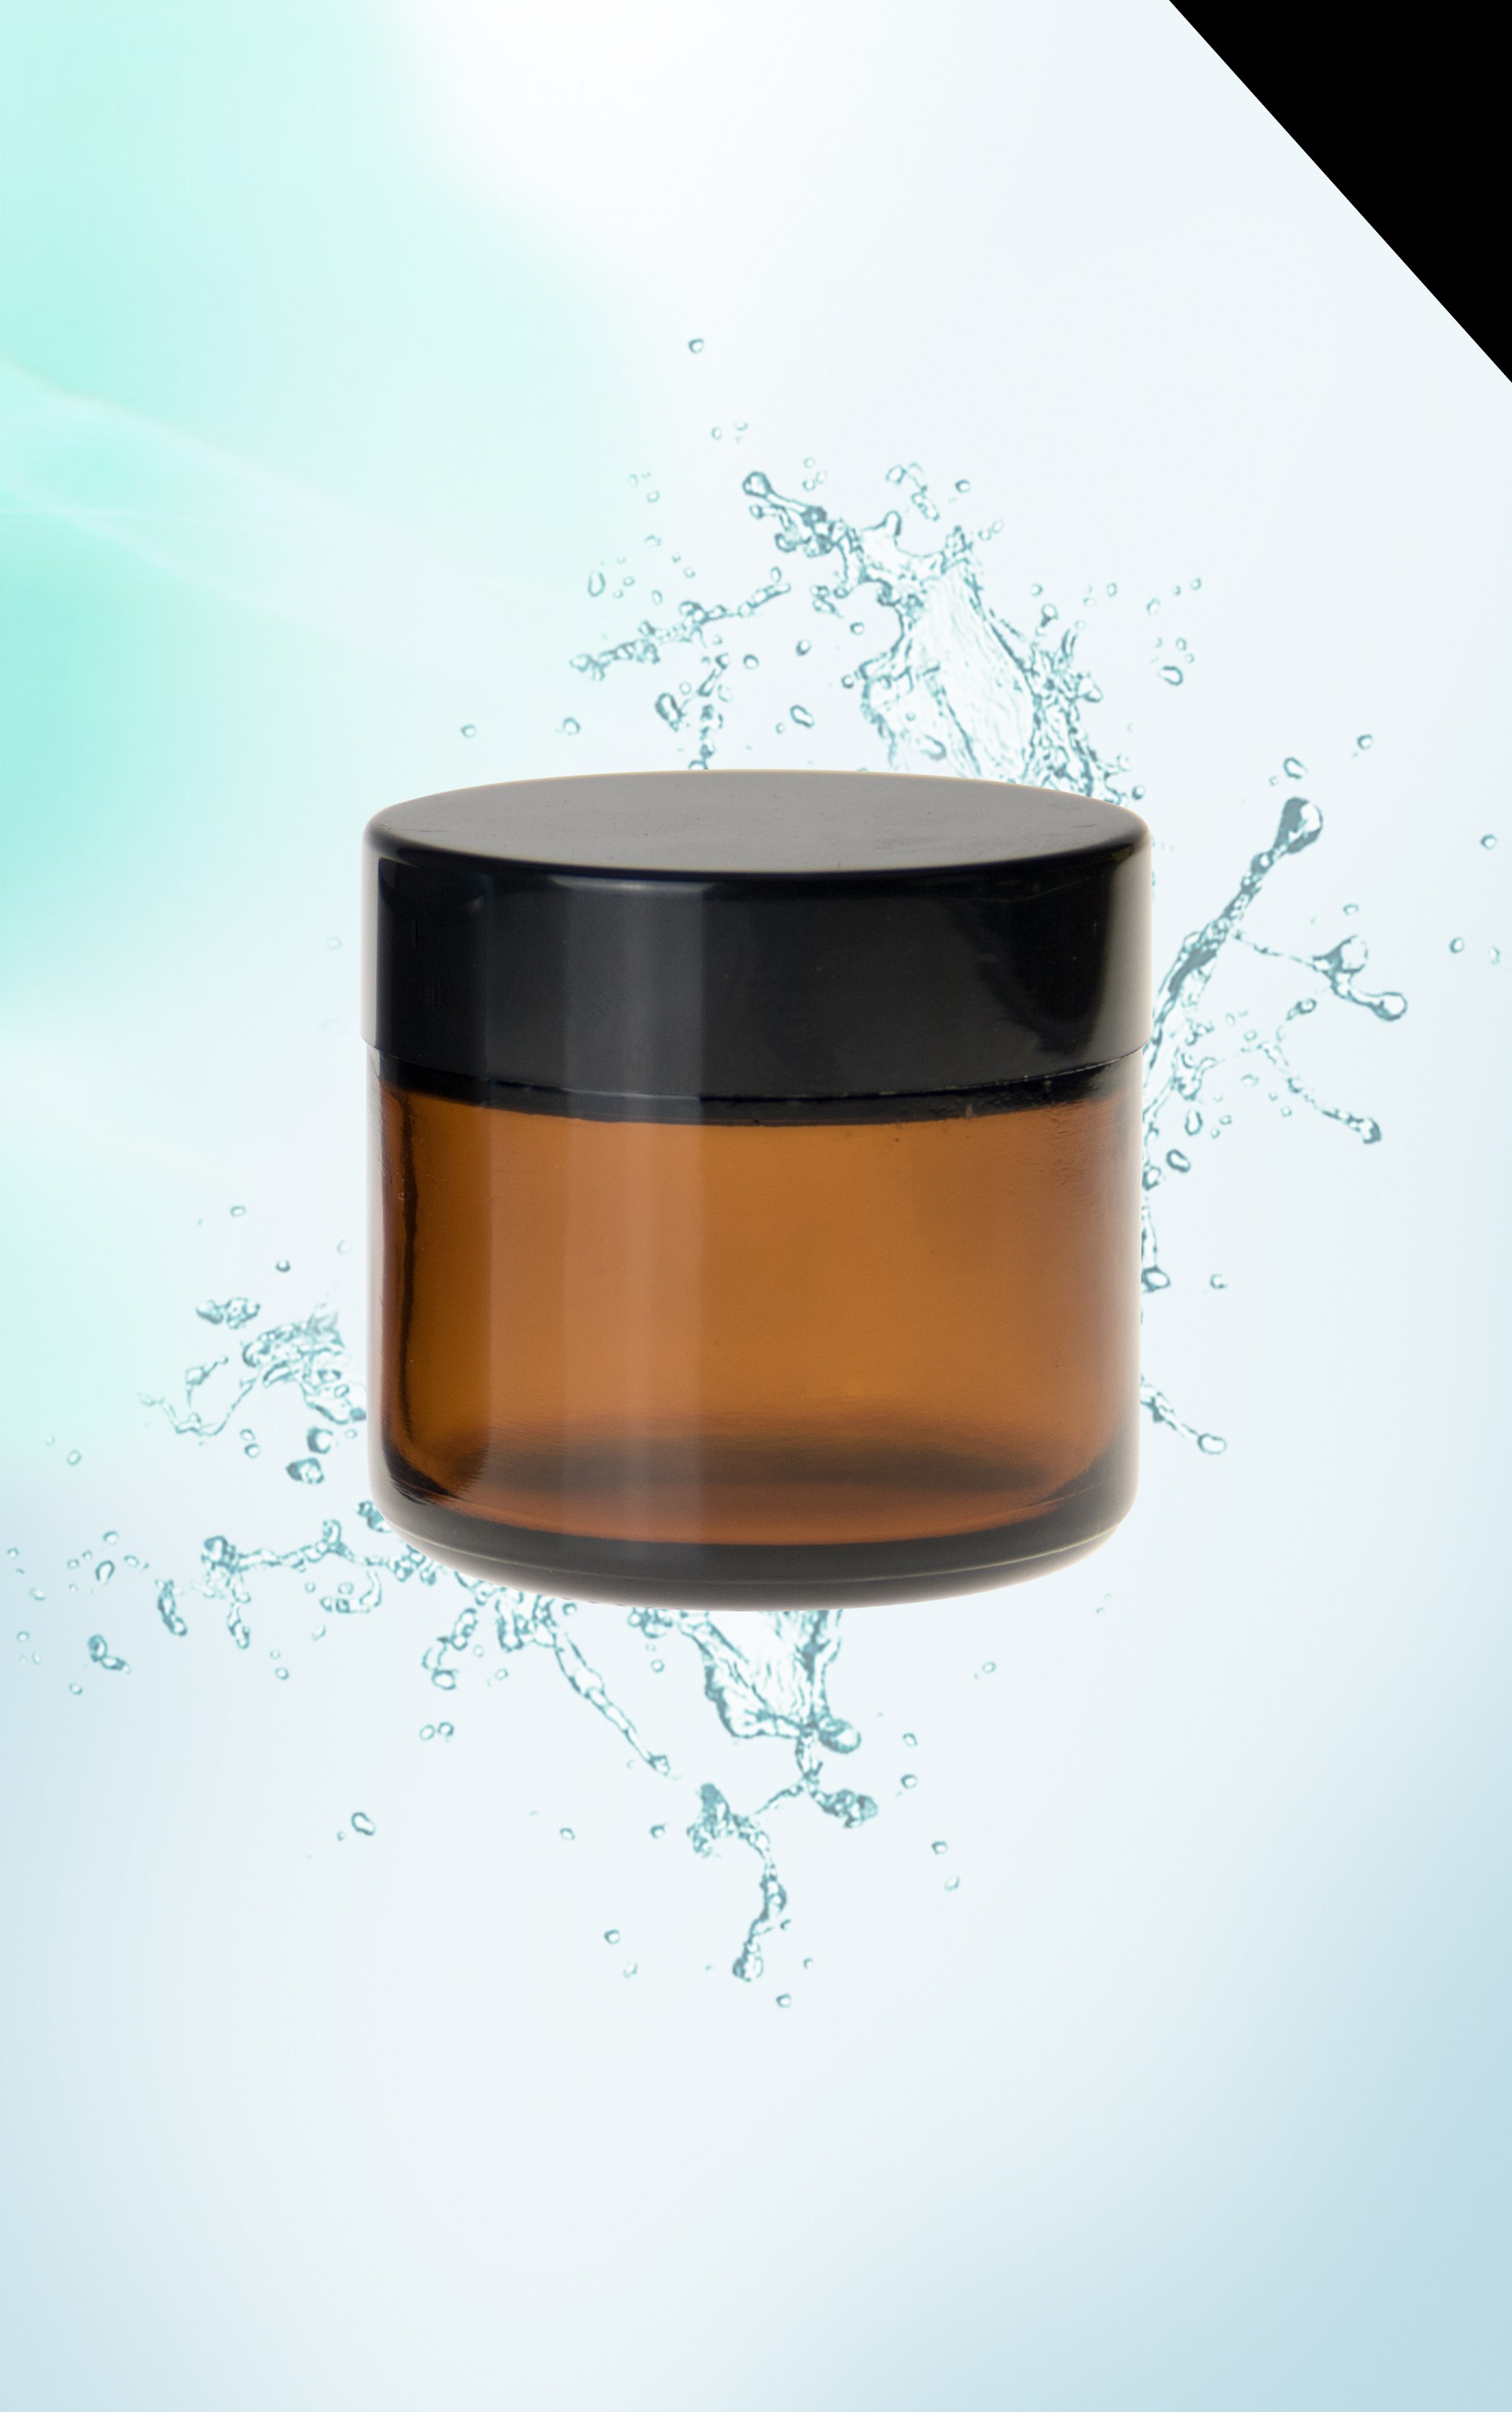 30ml Amber Glass CBD Jars With Screw Cap Featured Image